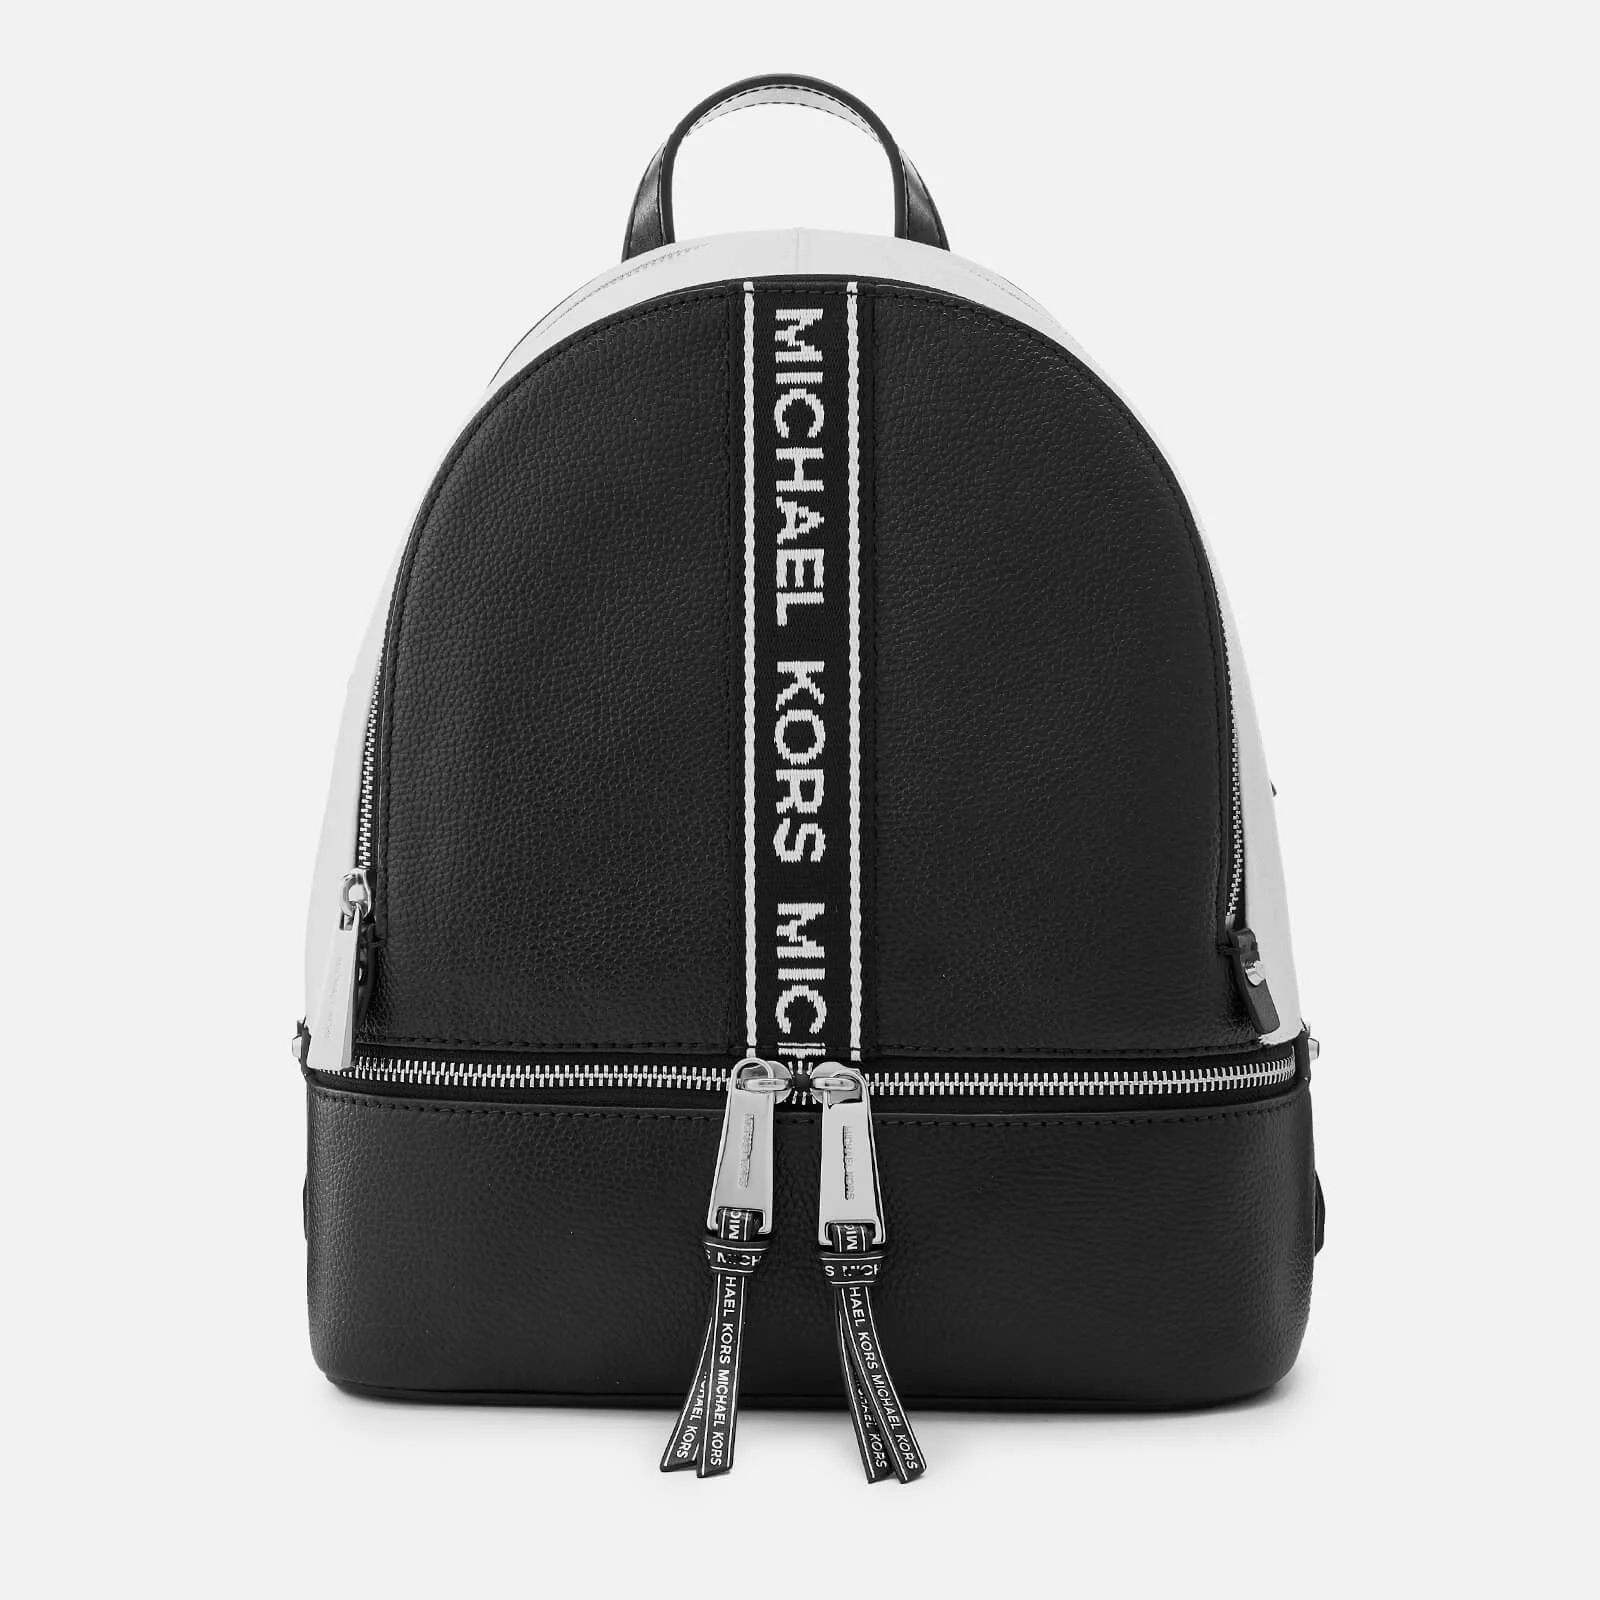 MICHAEL MICHAEL KORS Women's Rhea Zip Backpack - Black/White Image 1